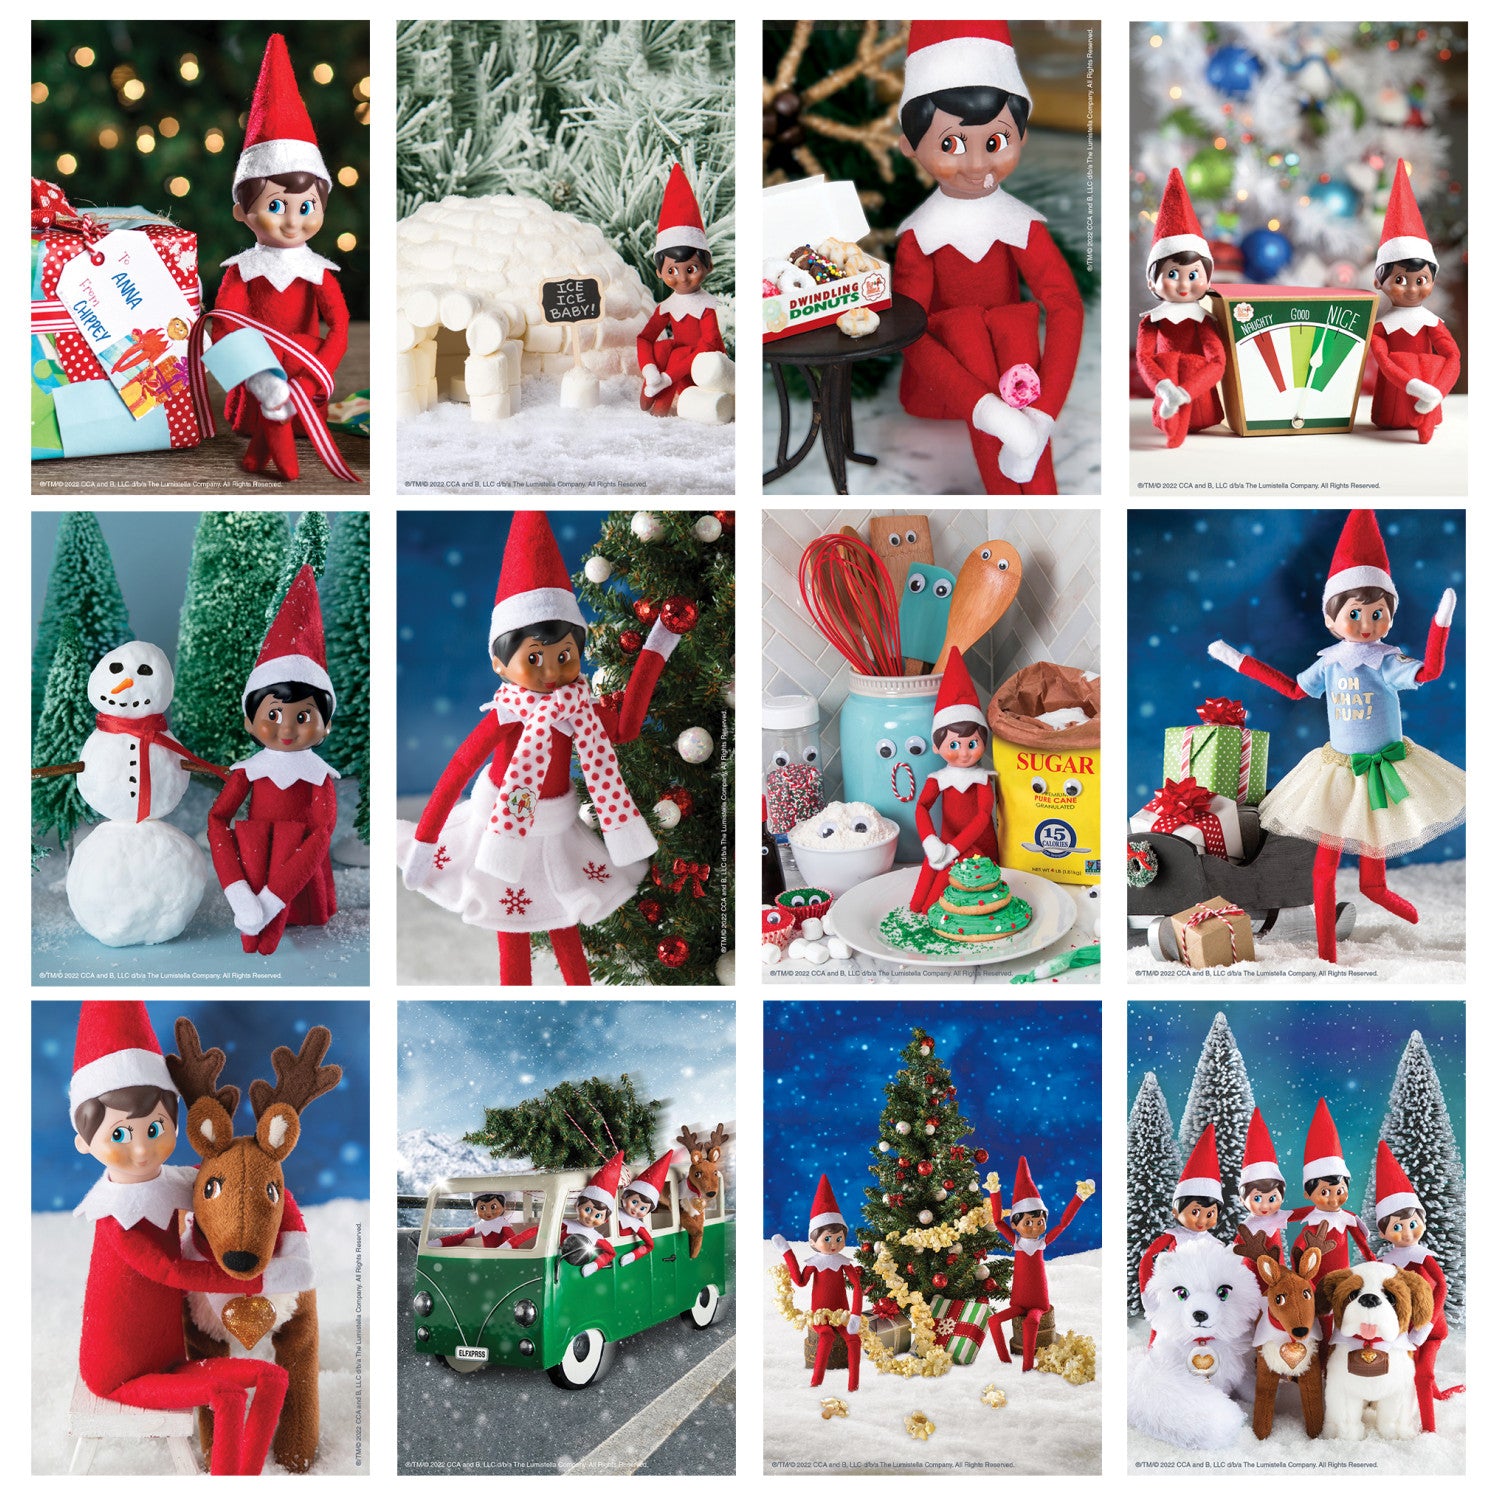 12 Days of Elf on the Shelf Puzzles - Advent Calendar